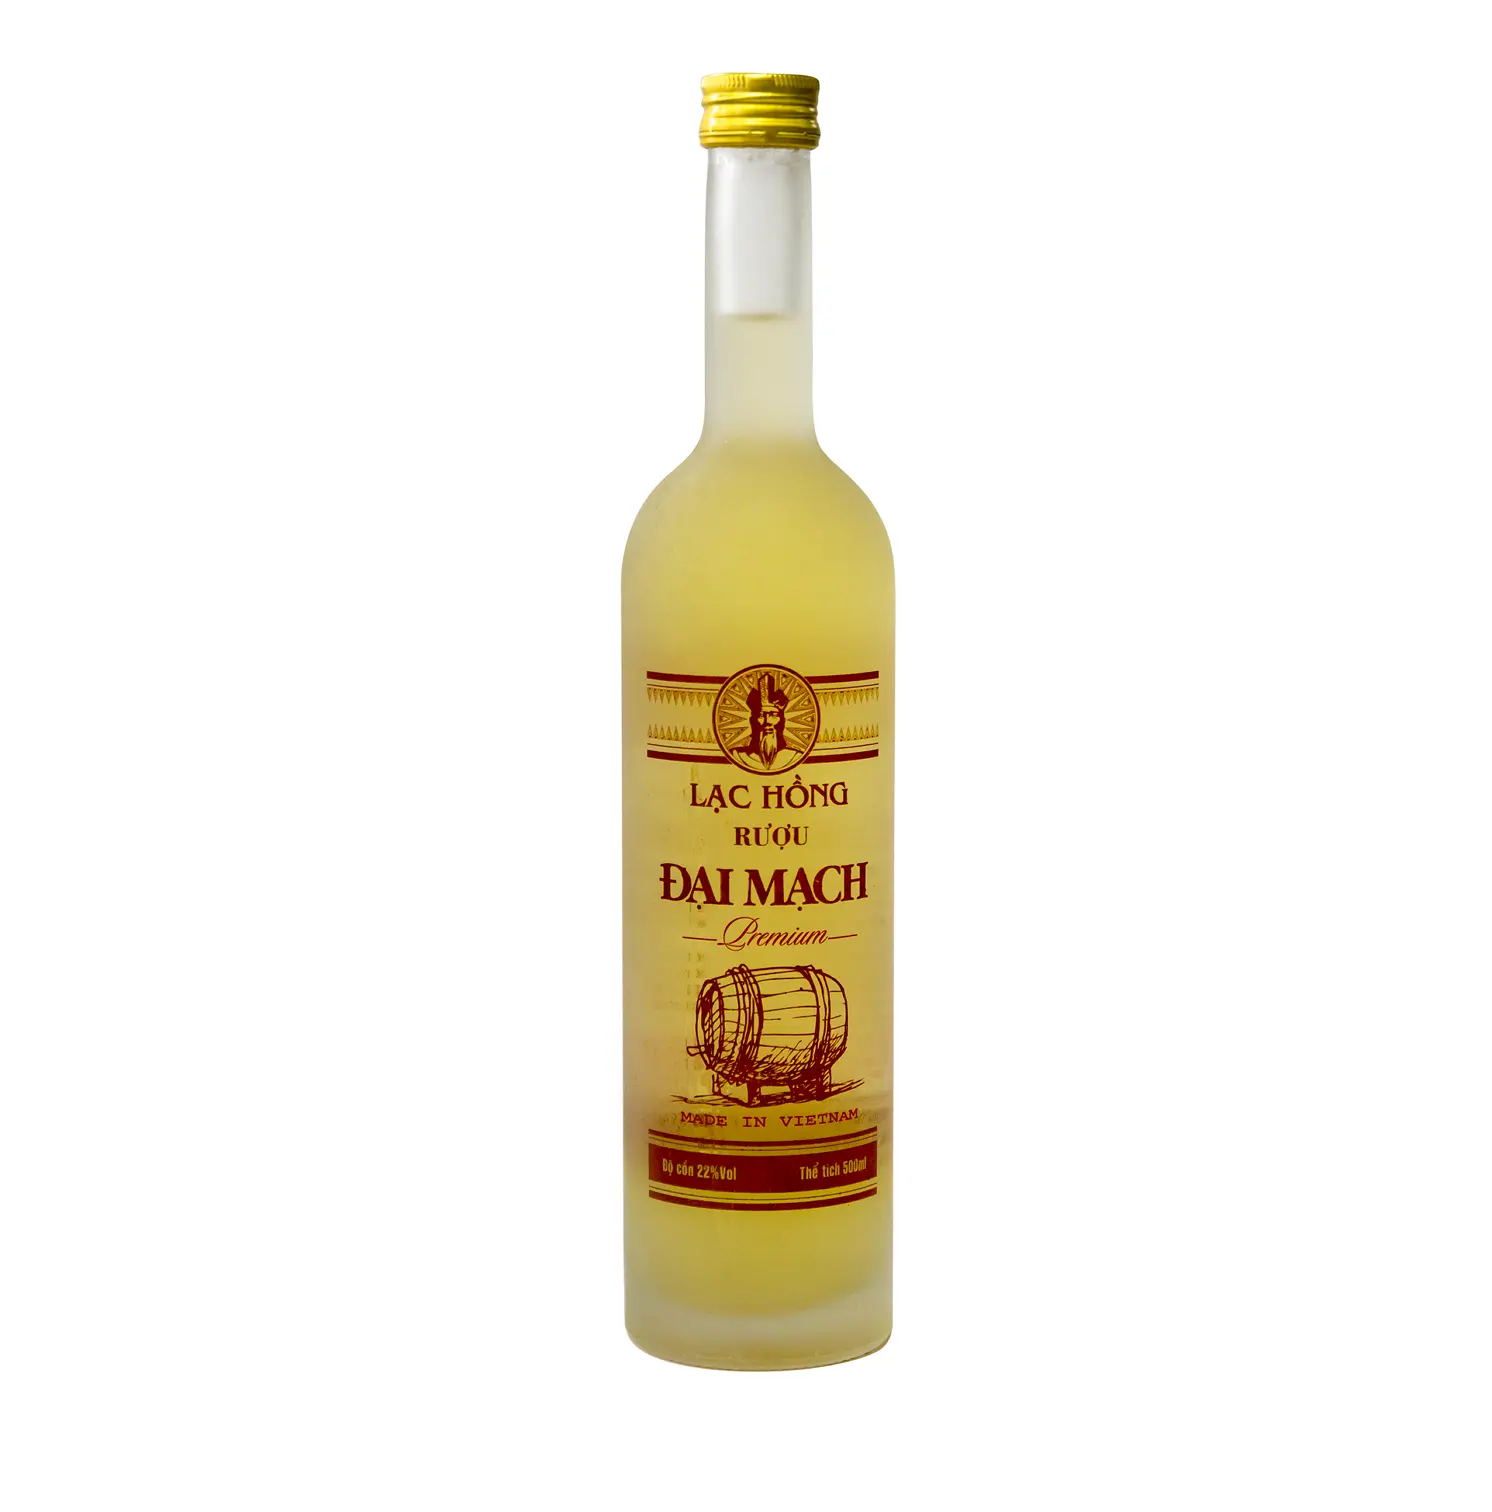 natural aroma liquor Vietnamese rice wine glass bottle 500ml